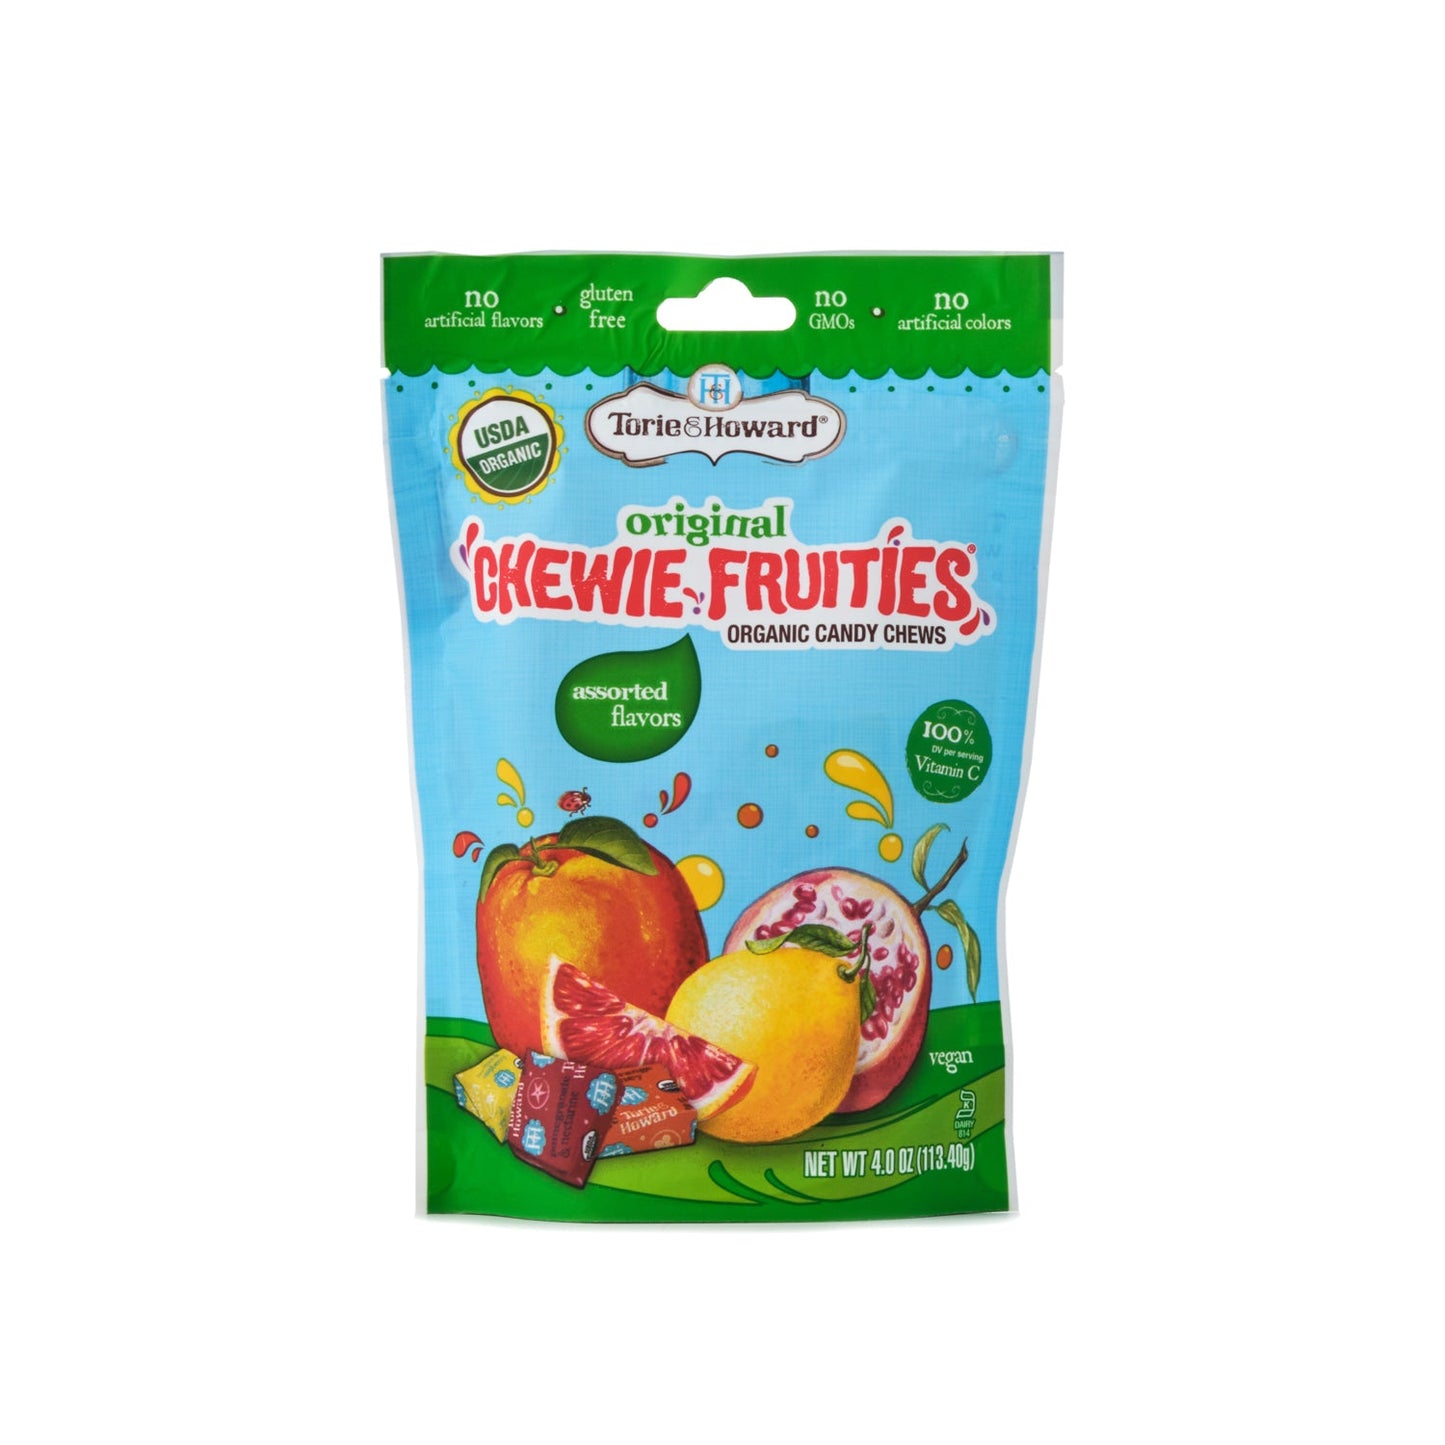 Torie & Howard Organic Assorted Chewy Fruities 113g